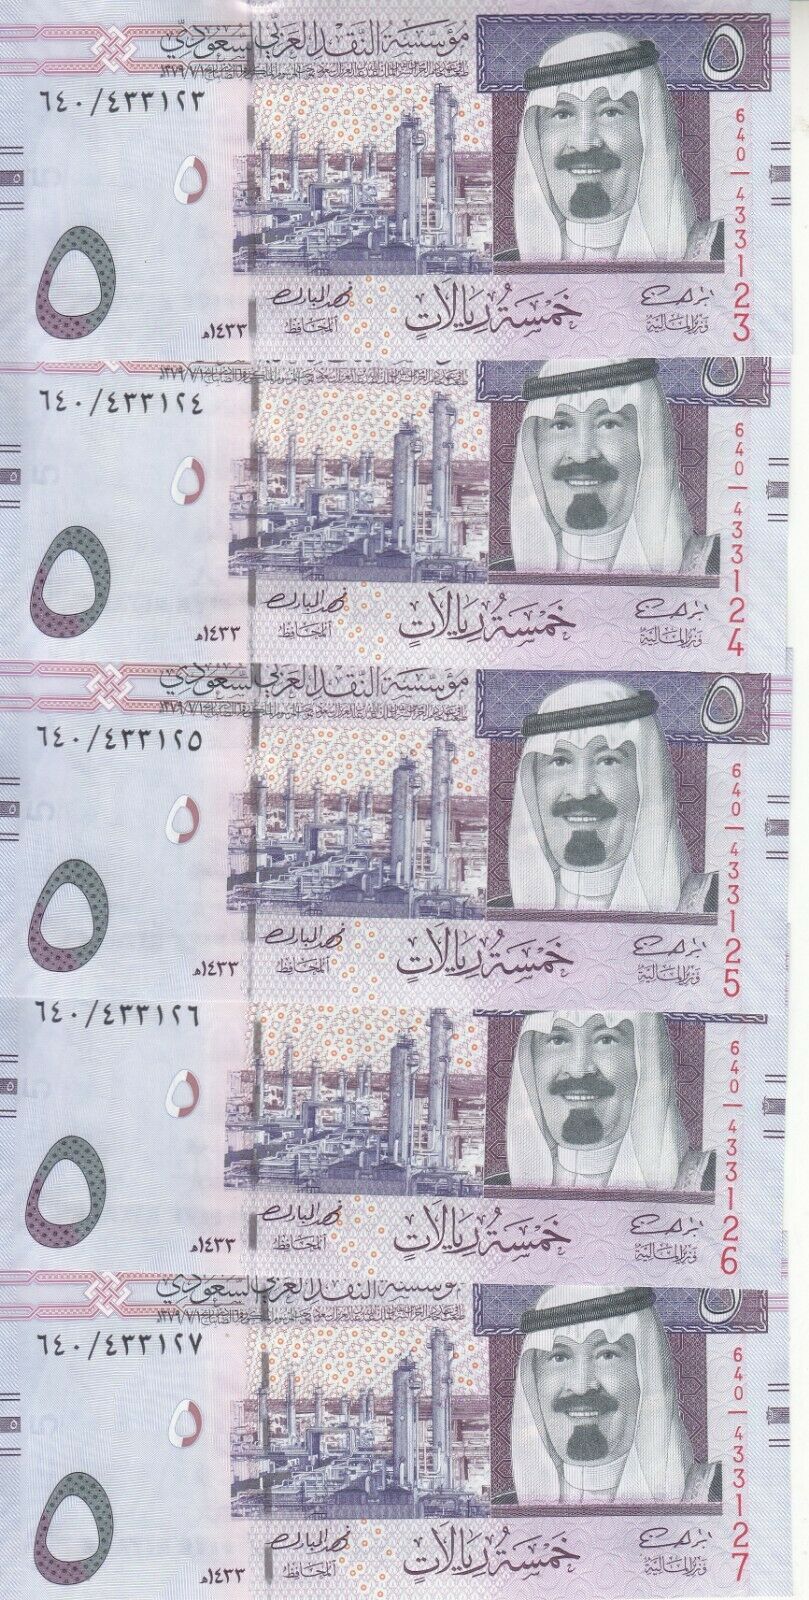 SAUDI ARABIA 5 RIYAL 2012 1433 P-32c KING ABD ALLAH NEW LOT X5 UNC NOTES */*